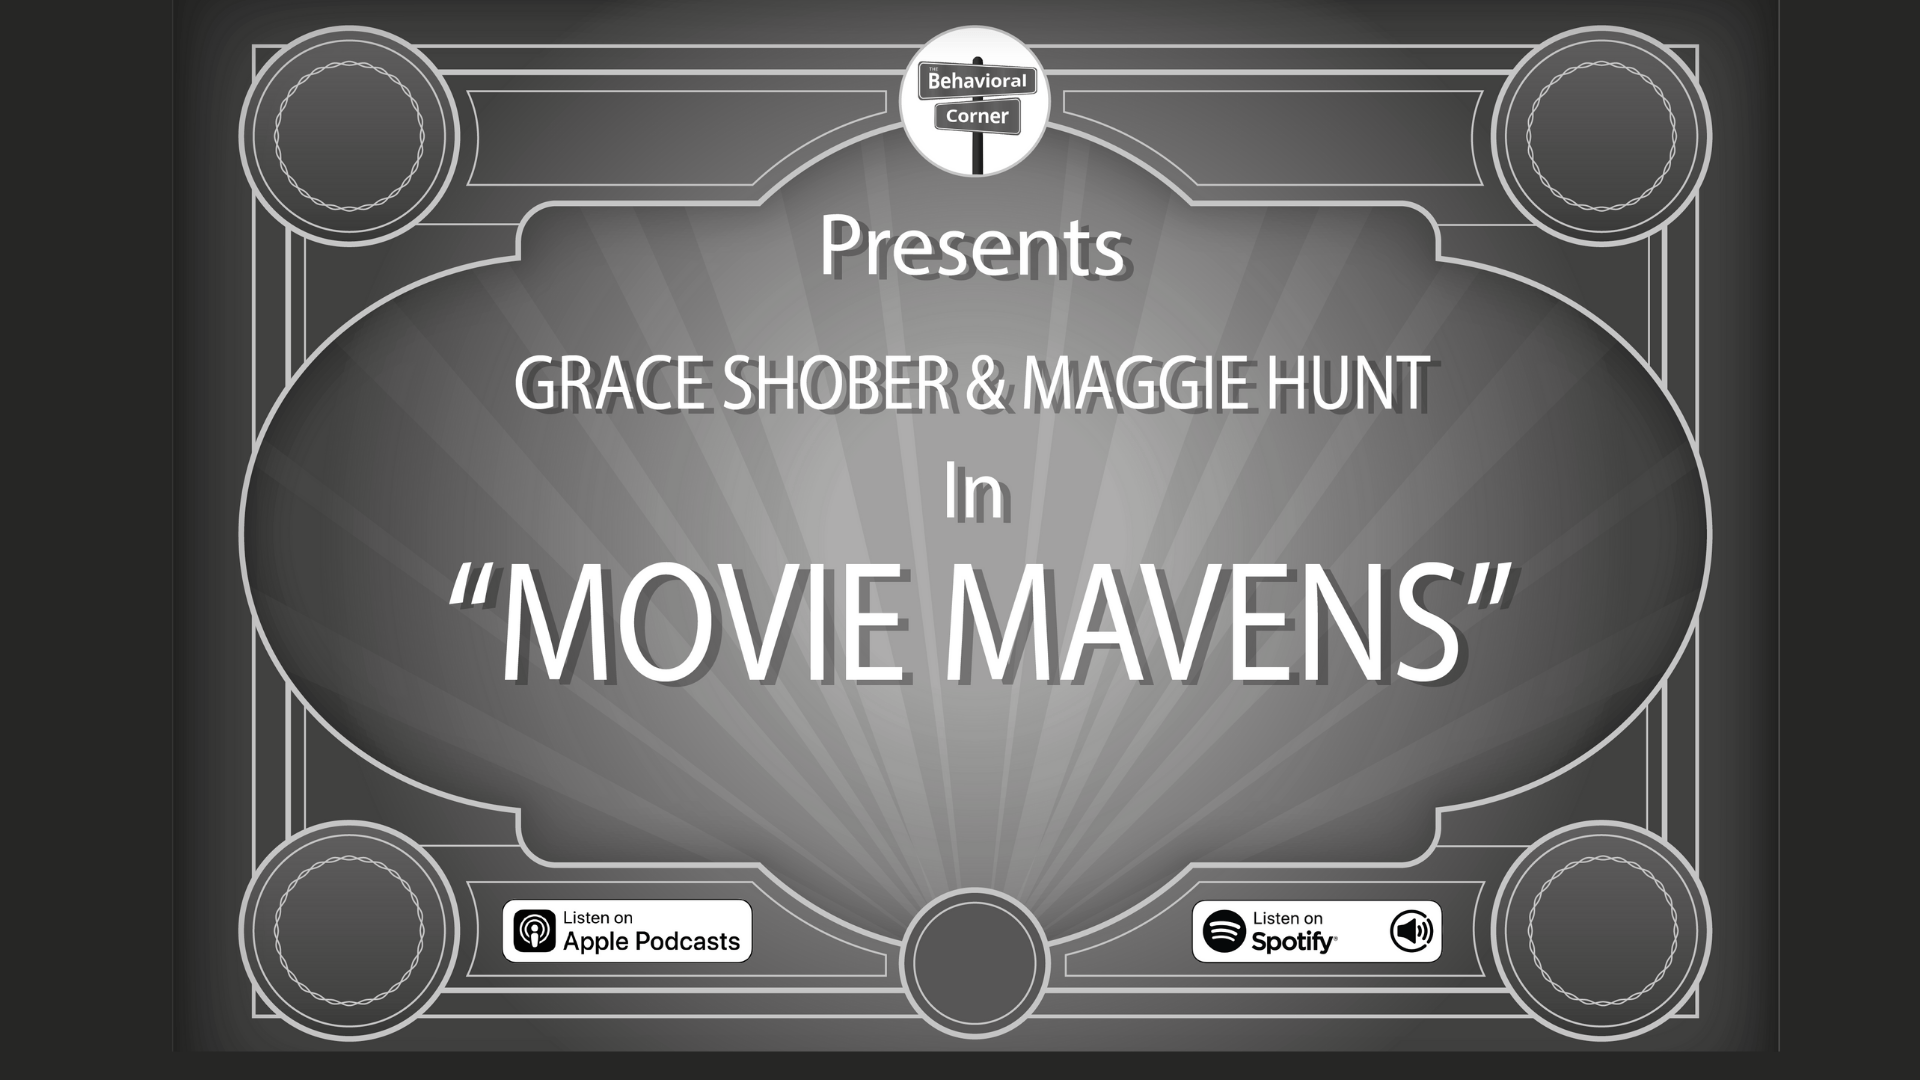 Ep. 89 - The Movie Mavens - Grace Shober and Maggie Hunt  -  The Behavioral Corner Podcast